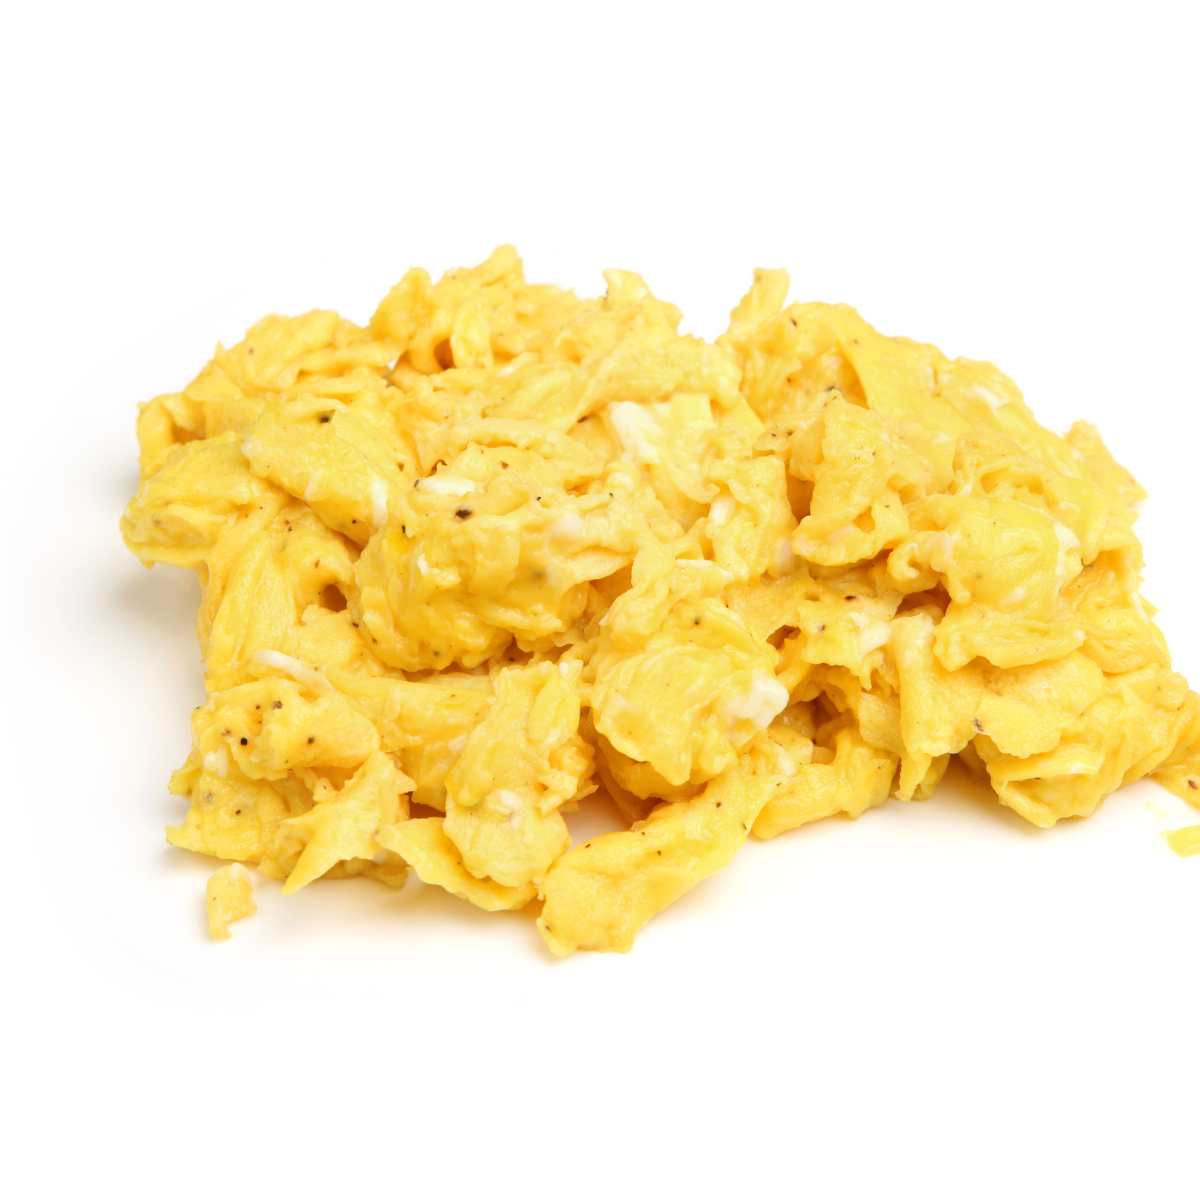 Hard scrambled eggs on a white background.